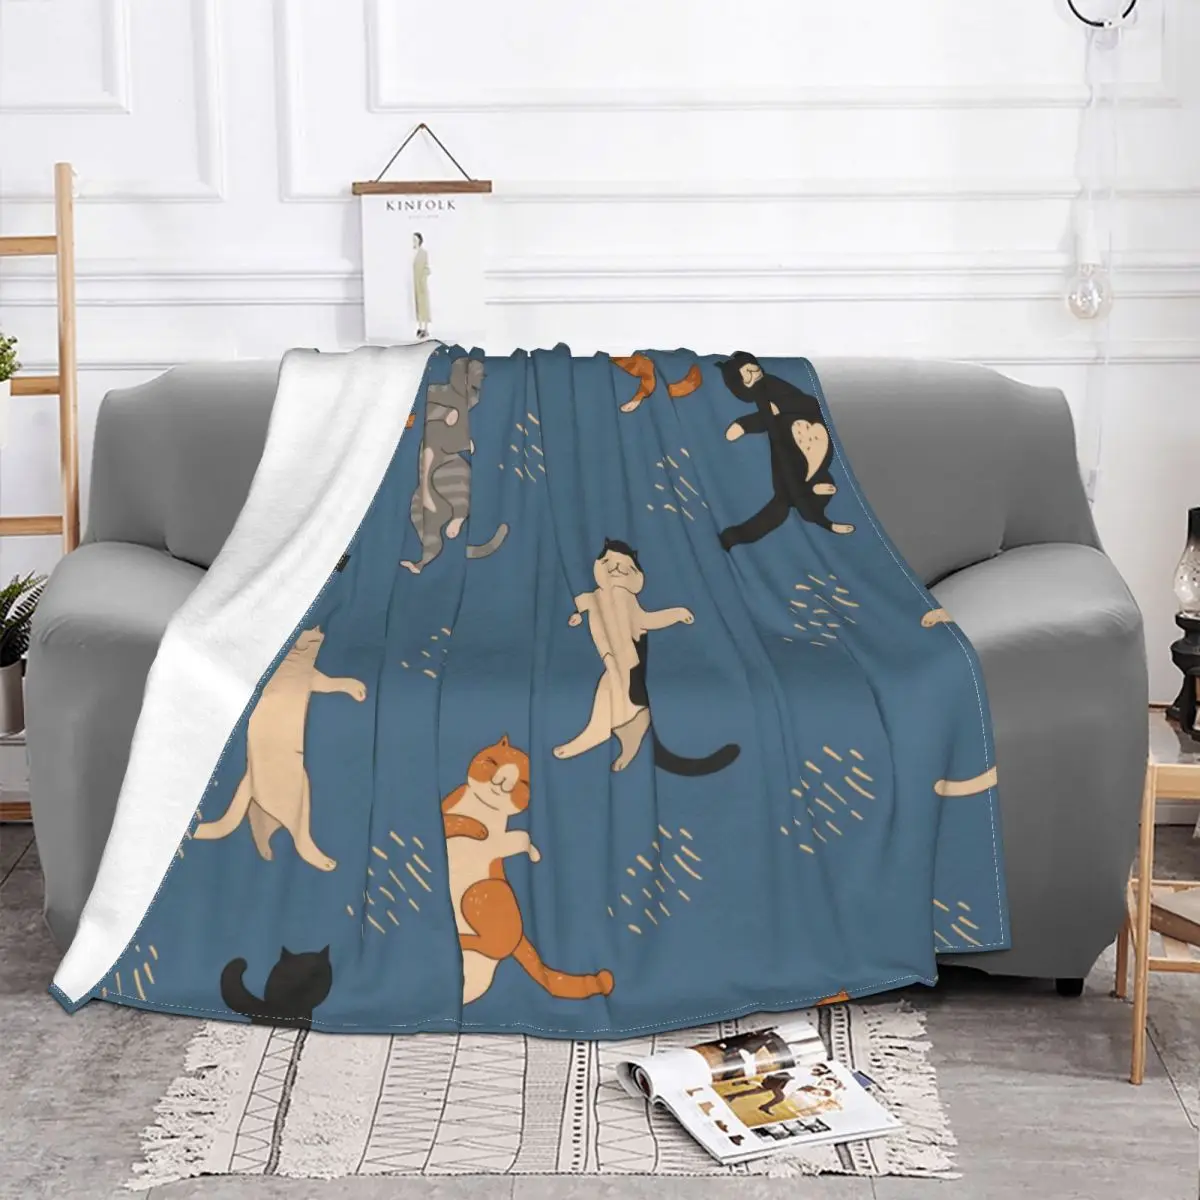 Одеяло в клетка с хубав модел котка, топло, уютно фланелевое флисовое одеало за трайно домашен интериор